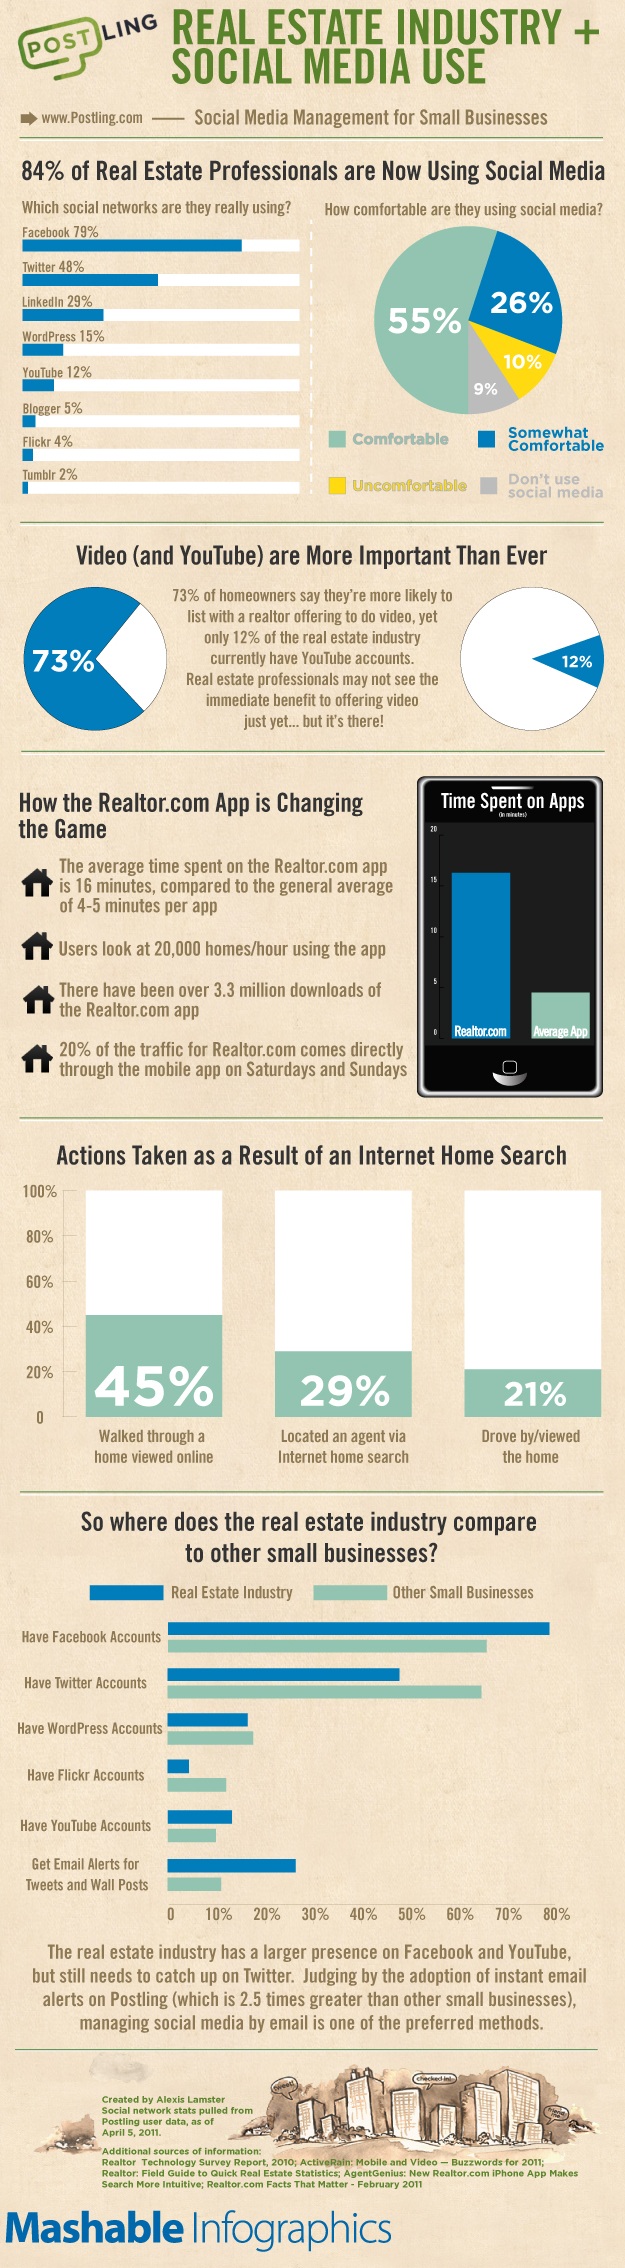 Social Media Real Estate Infographic Mashable